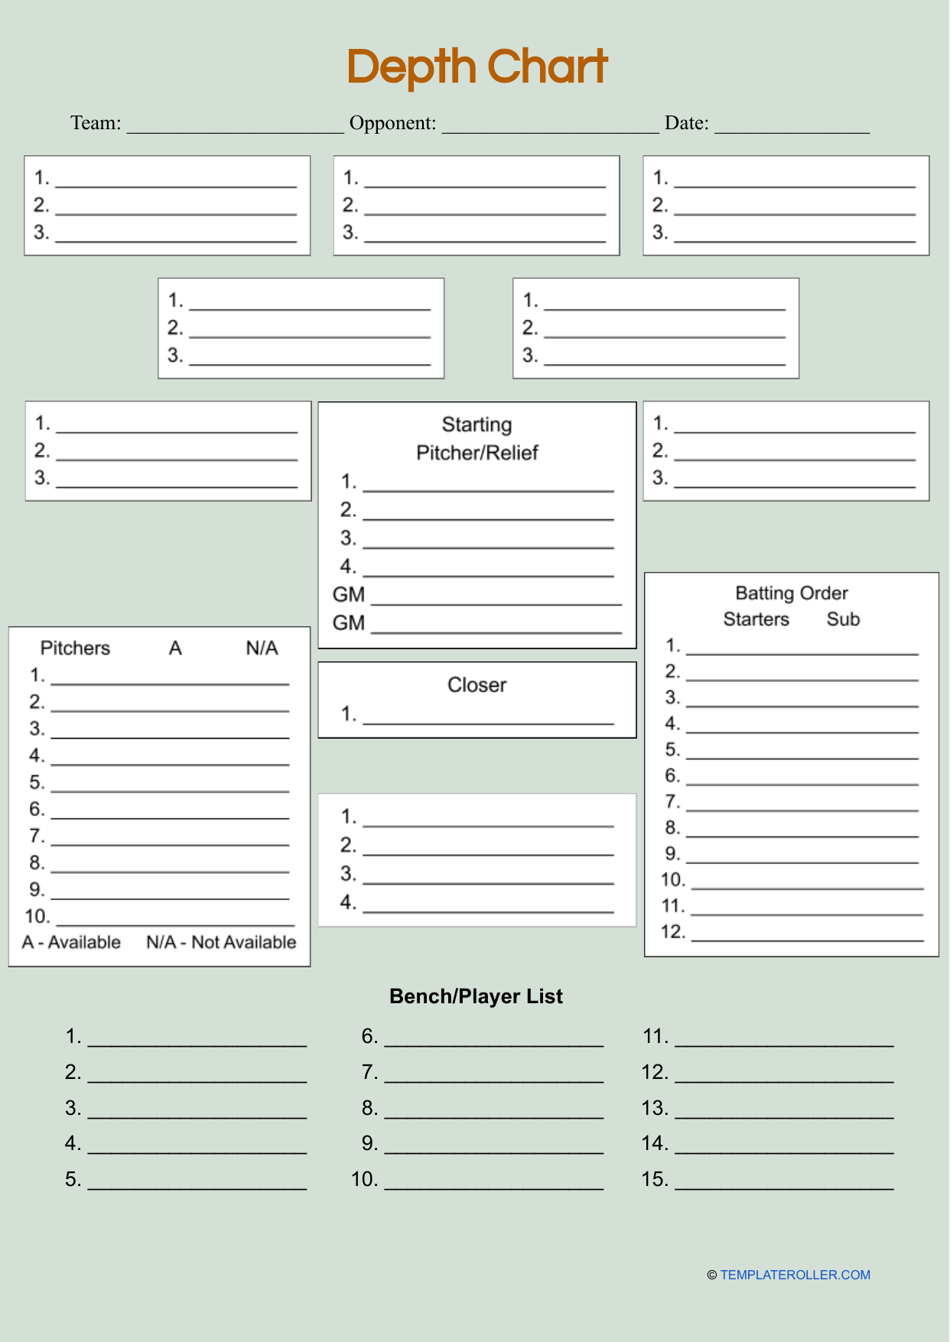 baseball-depth-chart-template-download-printable-pdf-templateroller